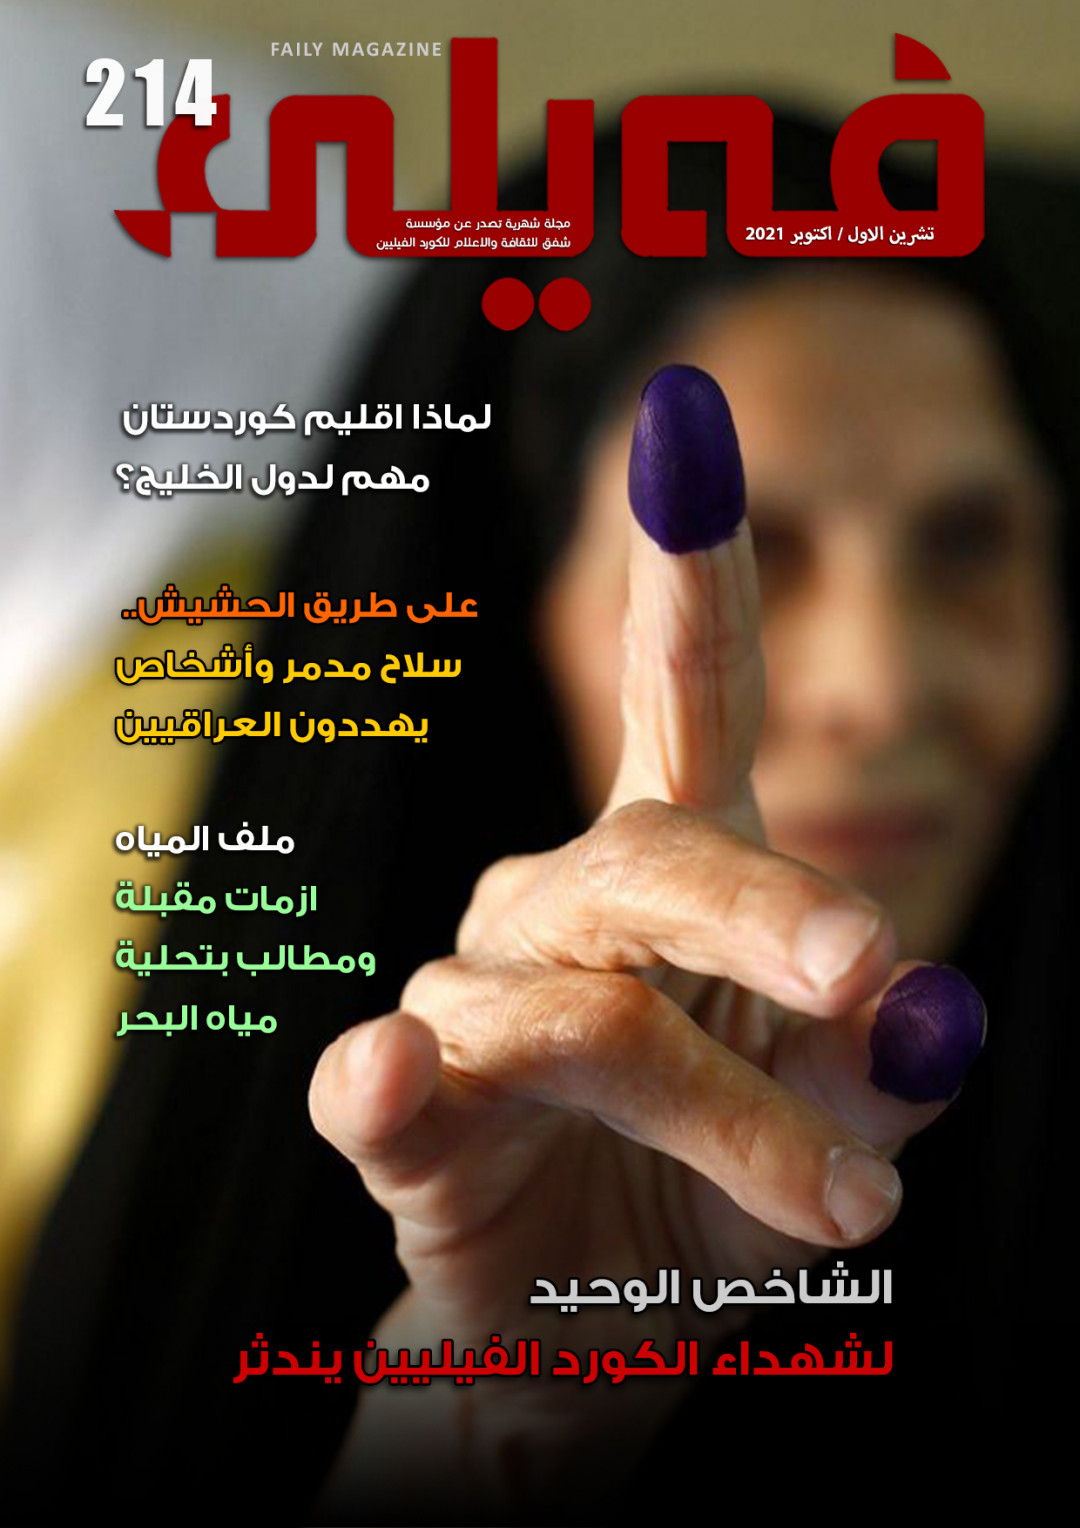 Faili Magazine 214th issue